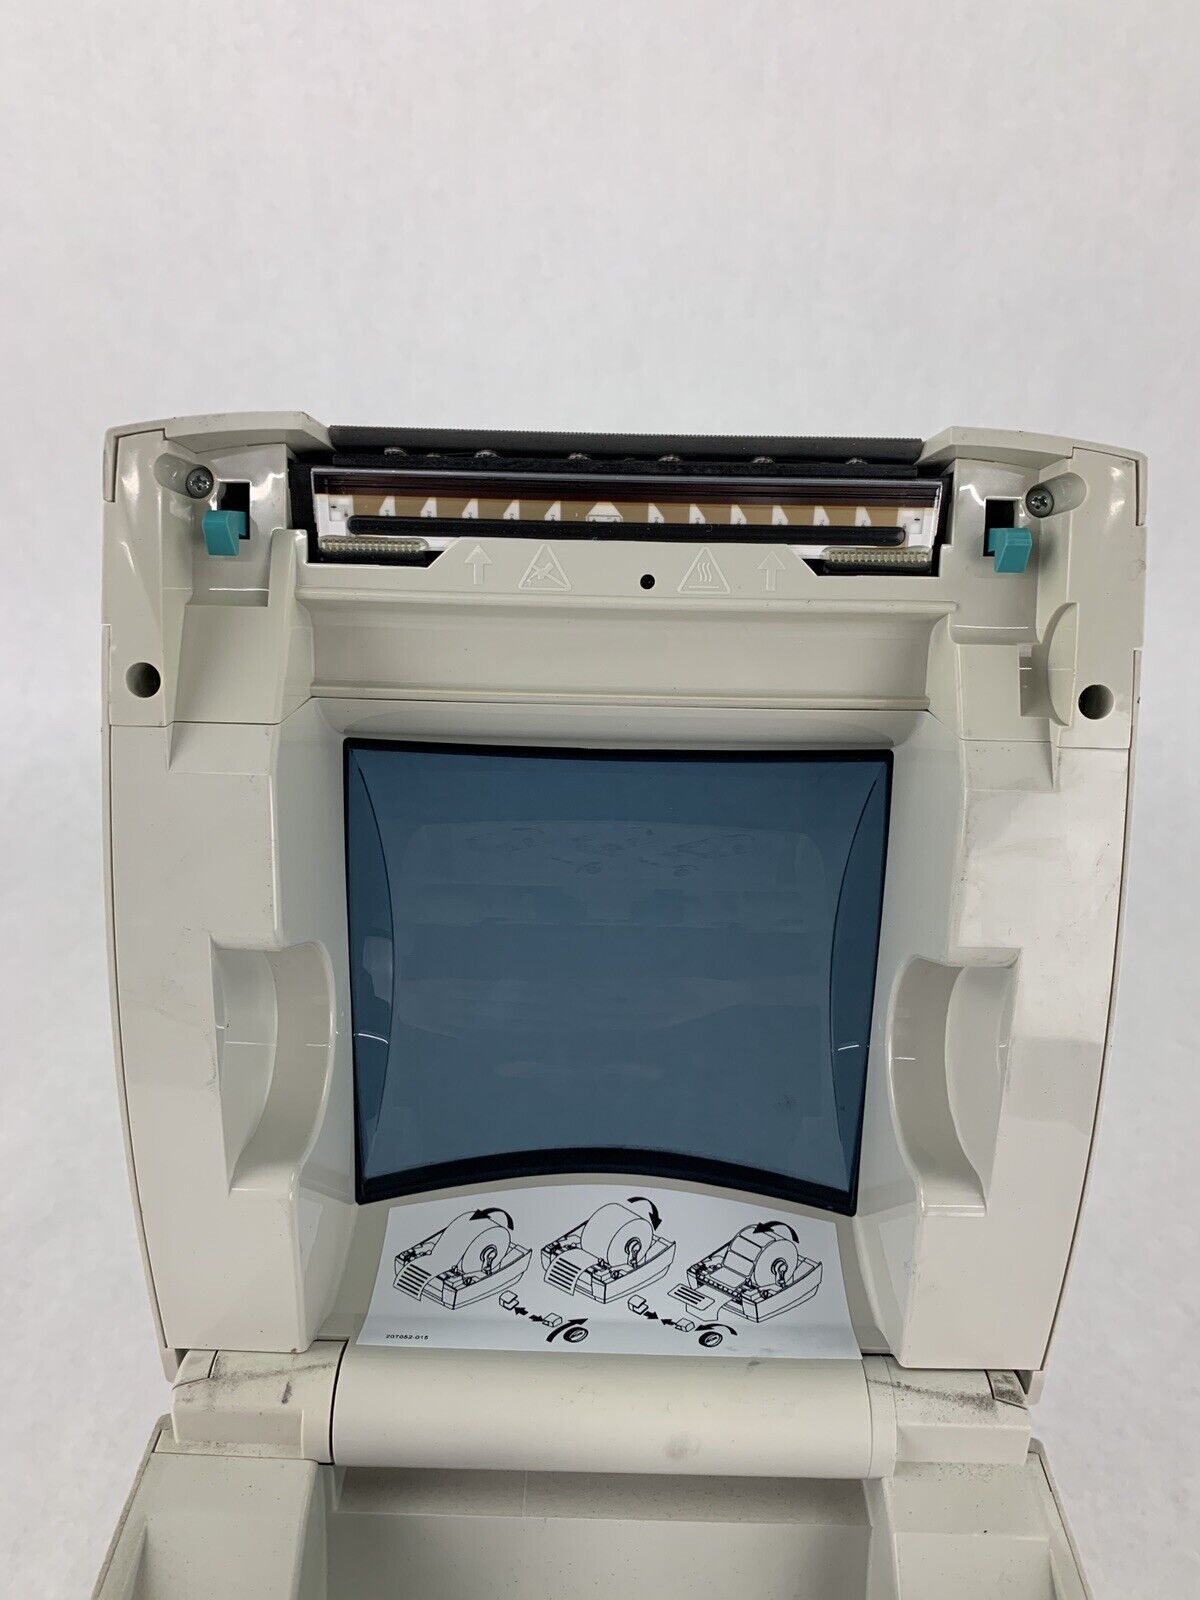 Zebra GC420D Direct USB Serial Label Printer Tested Bad Parallel Port Parts